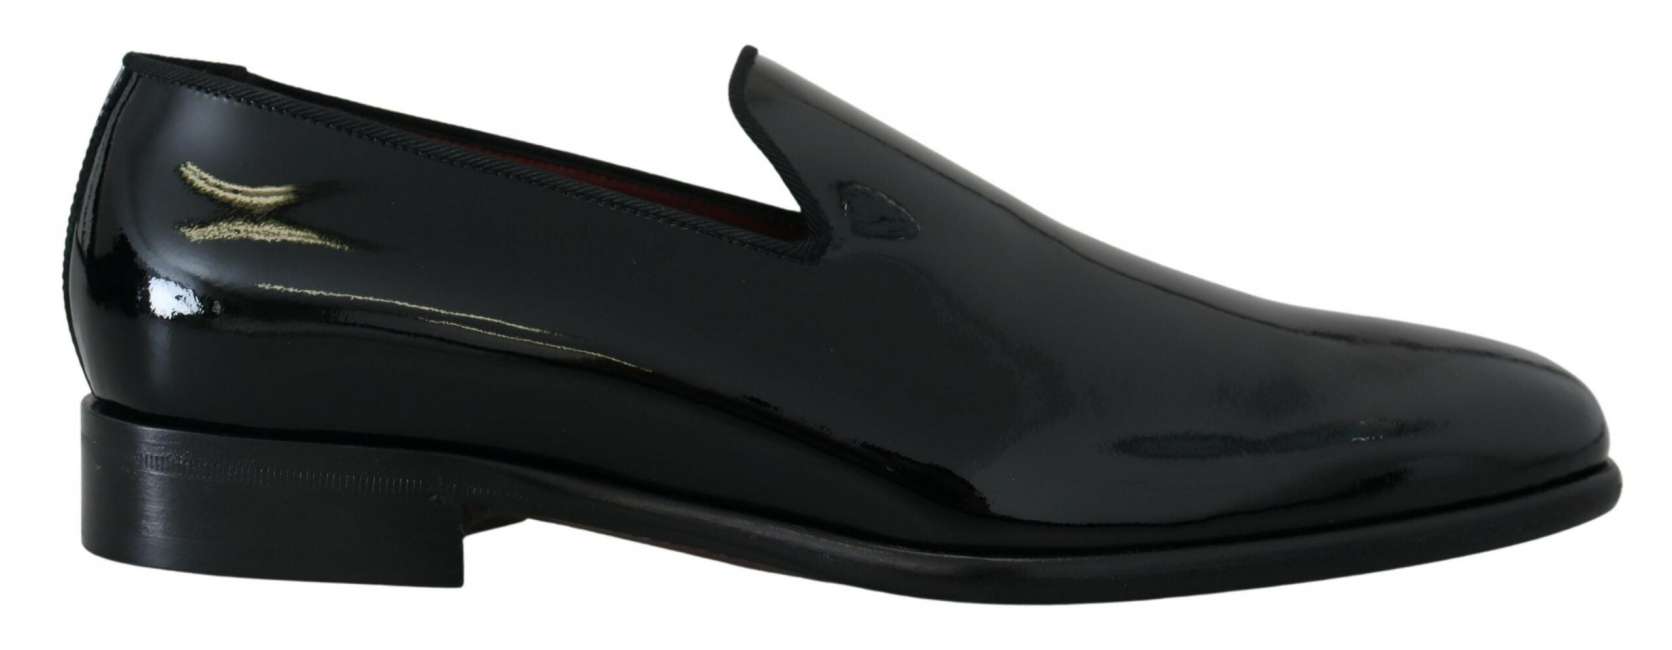 Priser på Dolce & Gabbana Sort Patent Slipper Loafers Slipon Shoes